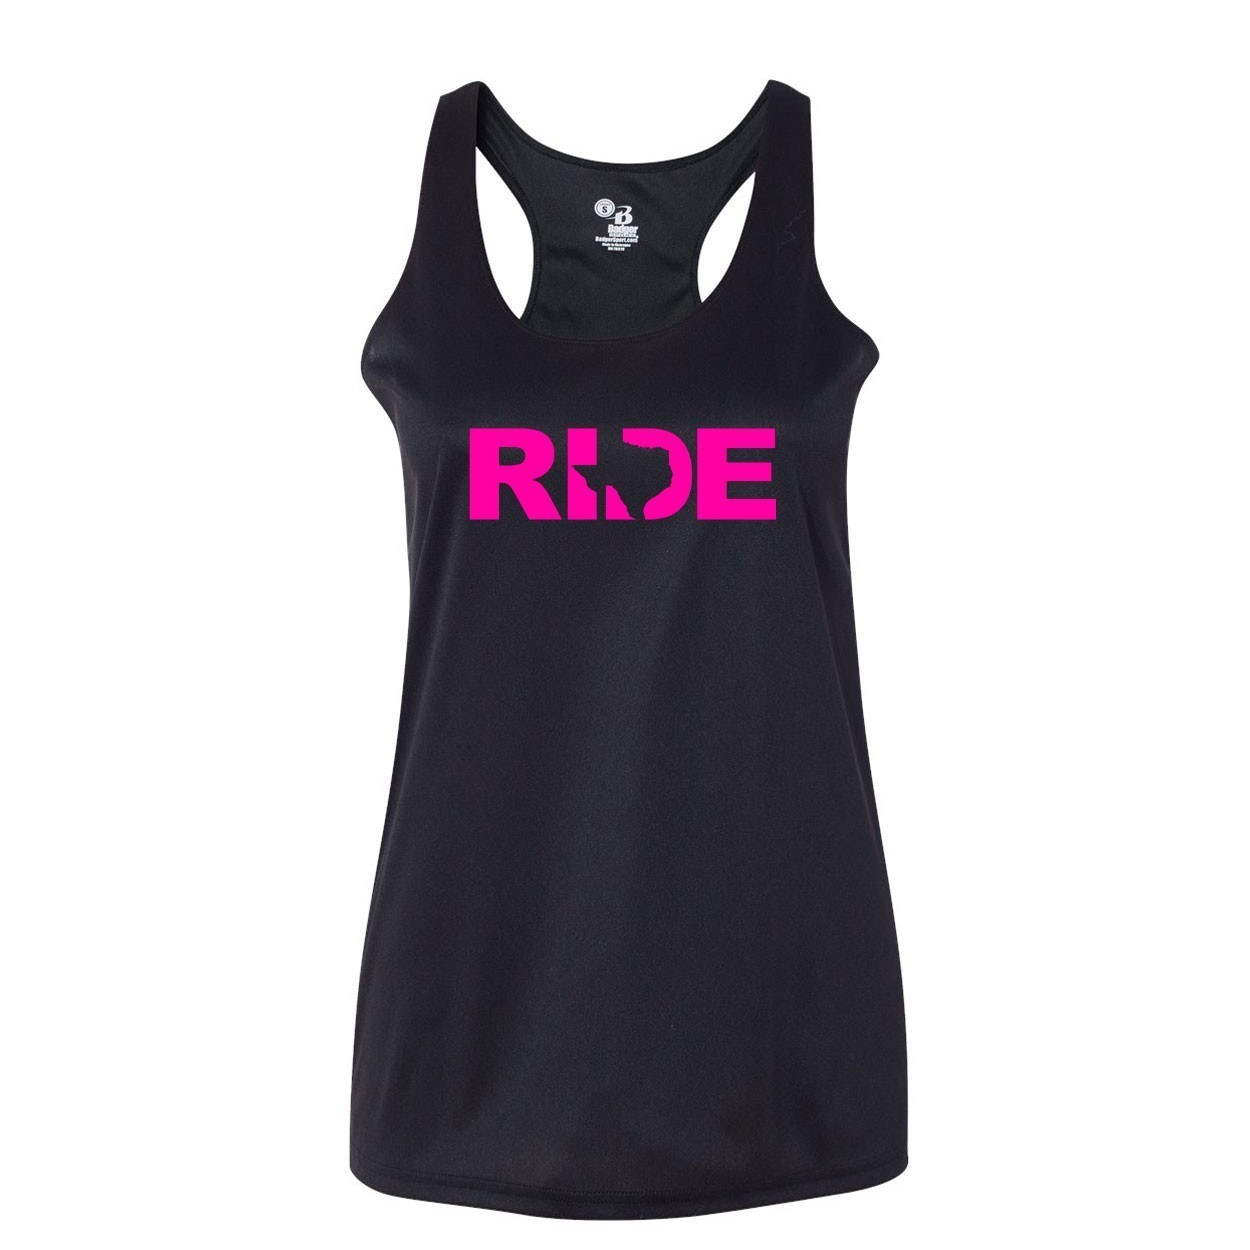 Ride Texas Classic Womens Performance Racerback Tank Top Black (Pink Logo)